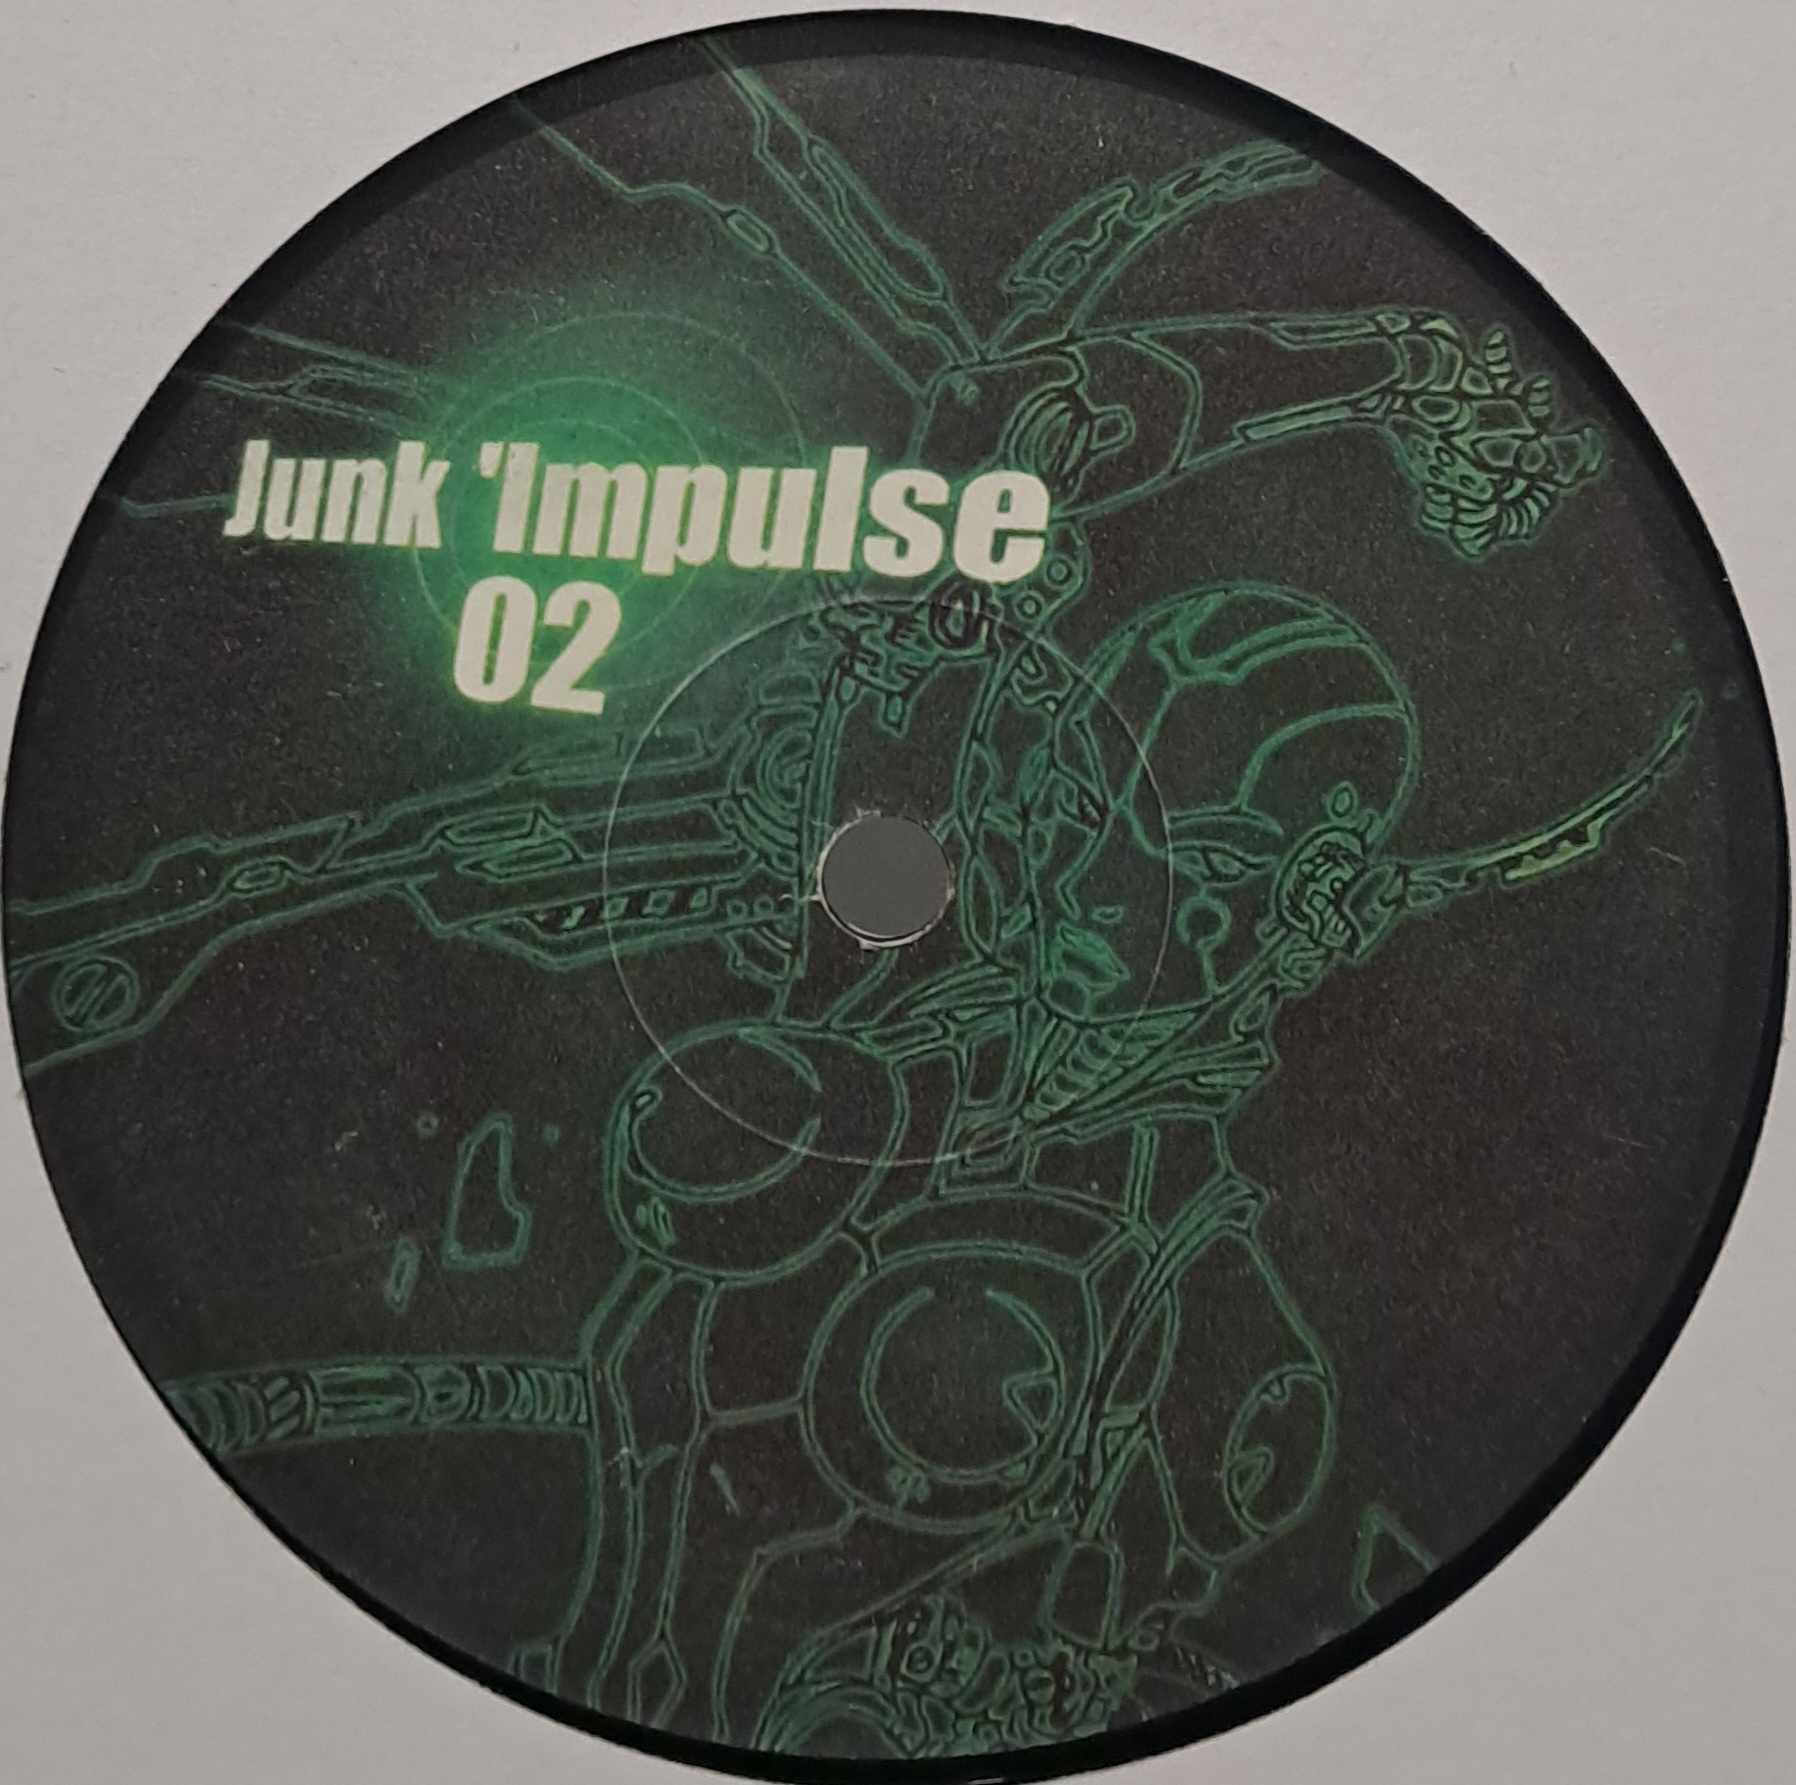 Junk Impulse 02 - vinyle acid